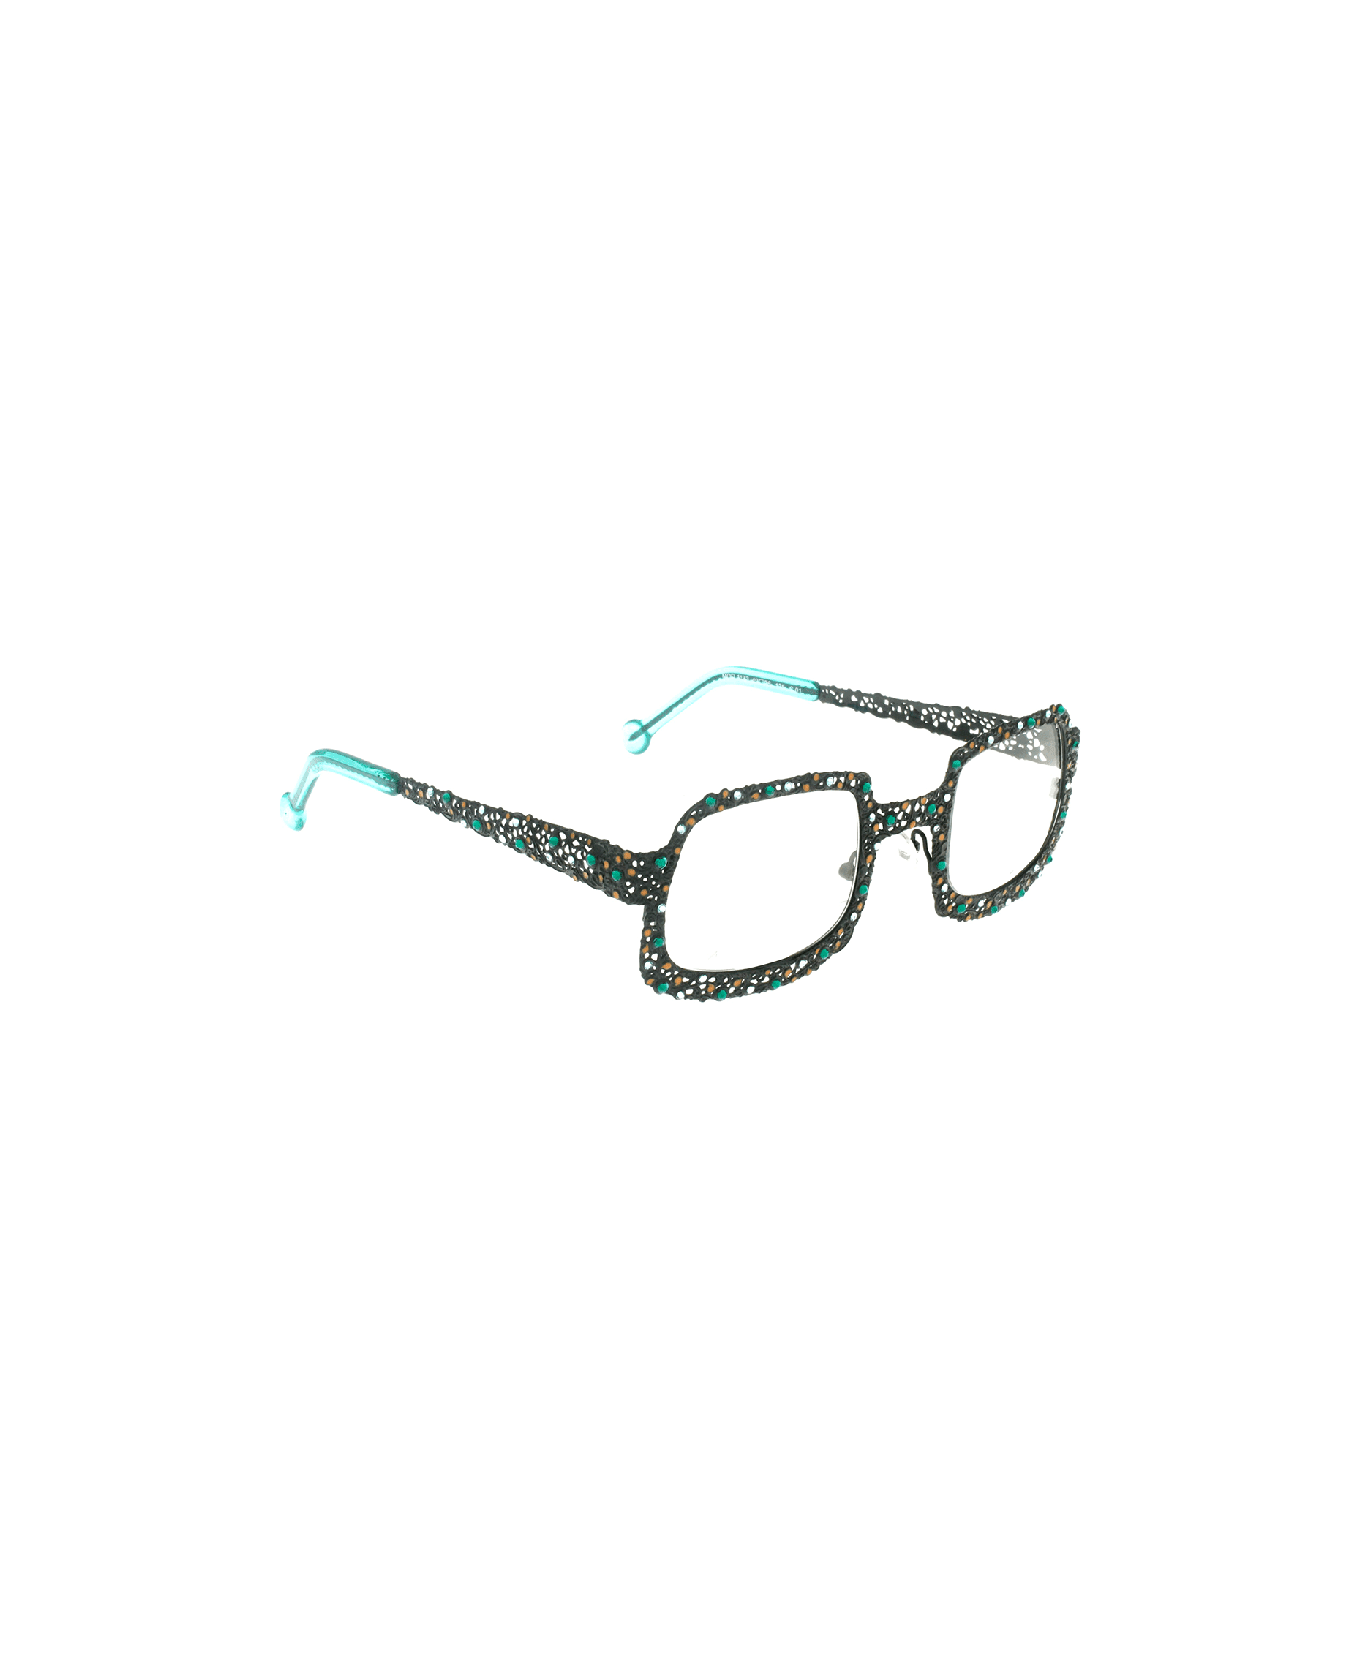 Liò Occhiali ISM1173 C01 Glasses - Nero アイウェア